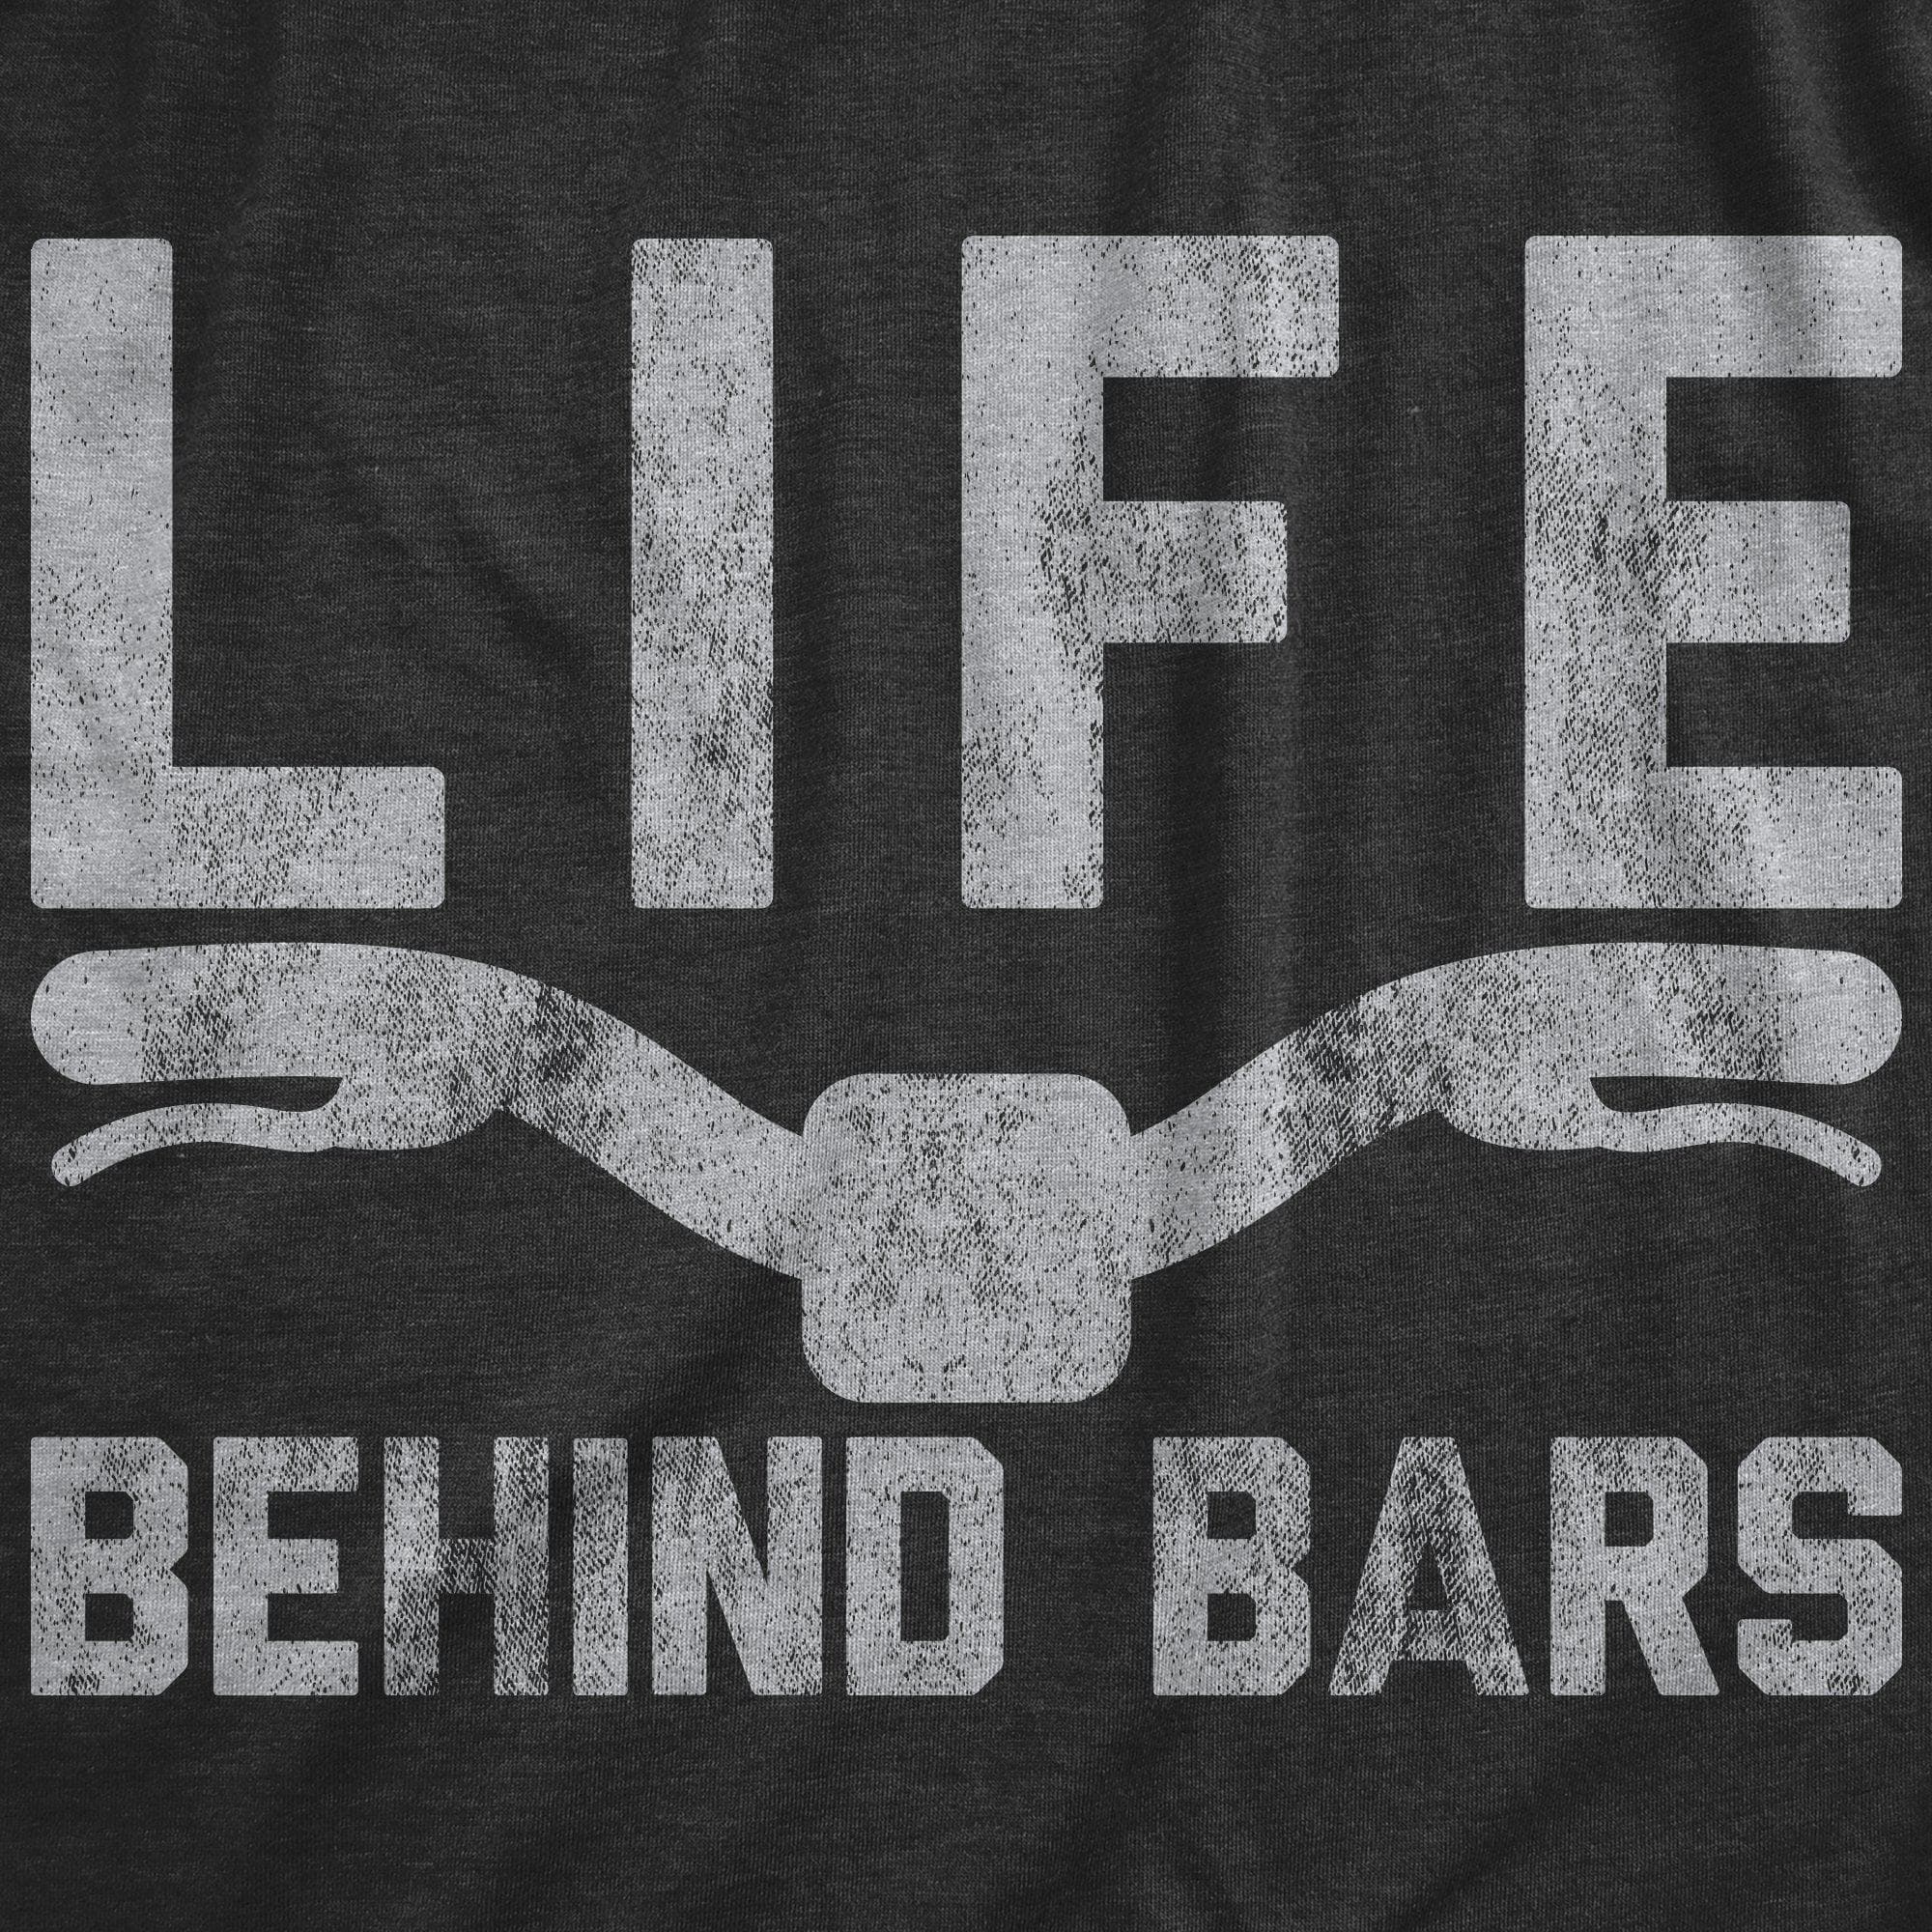 Life Behind Bars Men's Tshirt - Crazy Dog T-Shirts